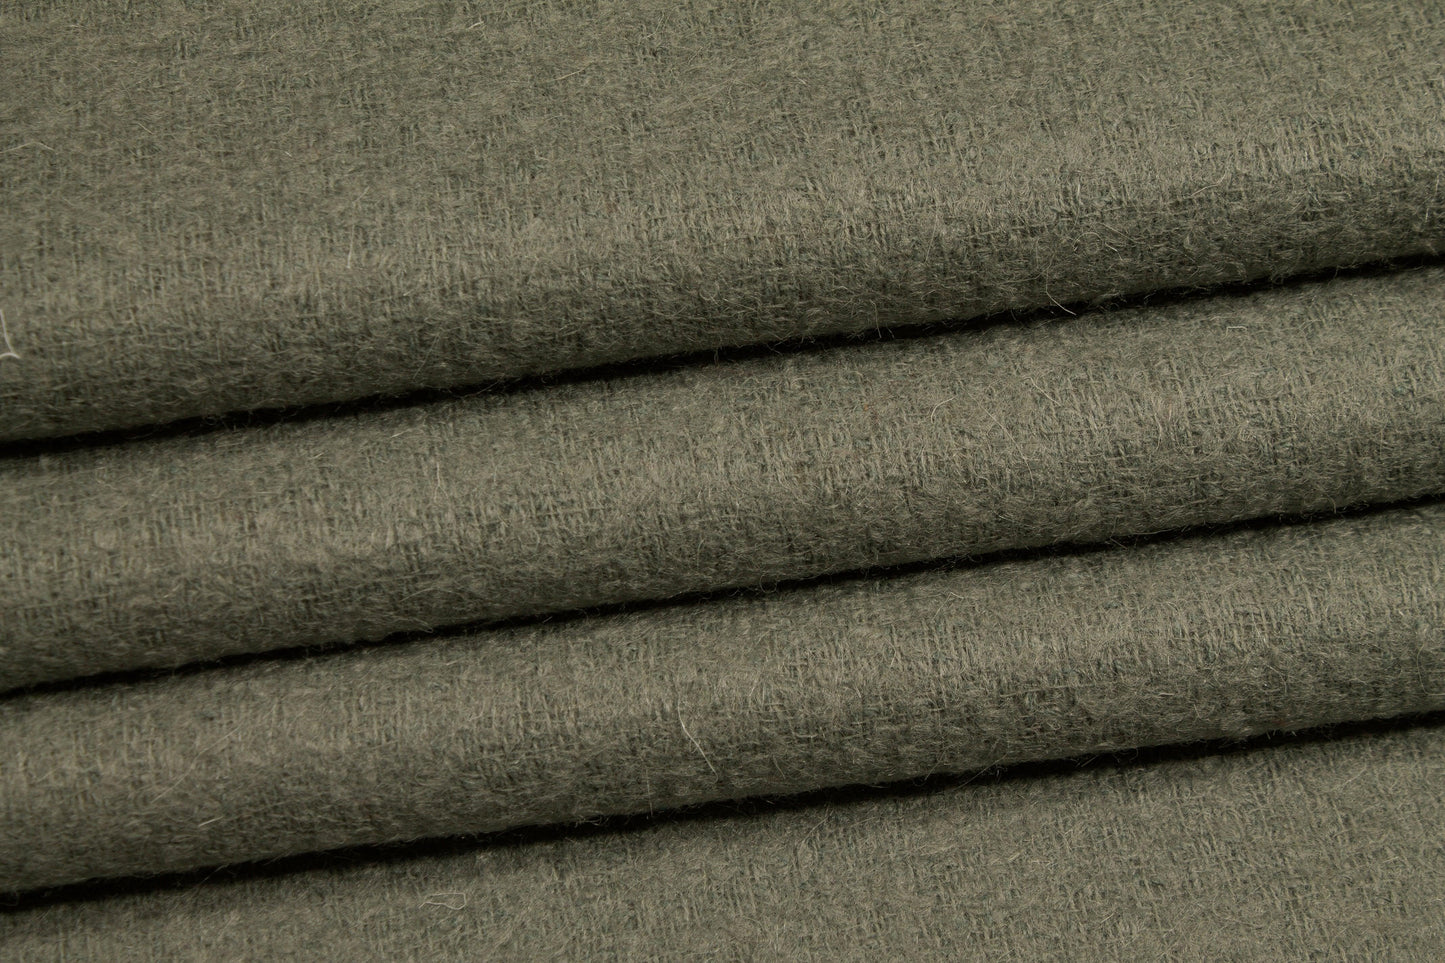 Green Italian Wool Tweed Coating - Prime Fabrics